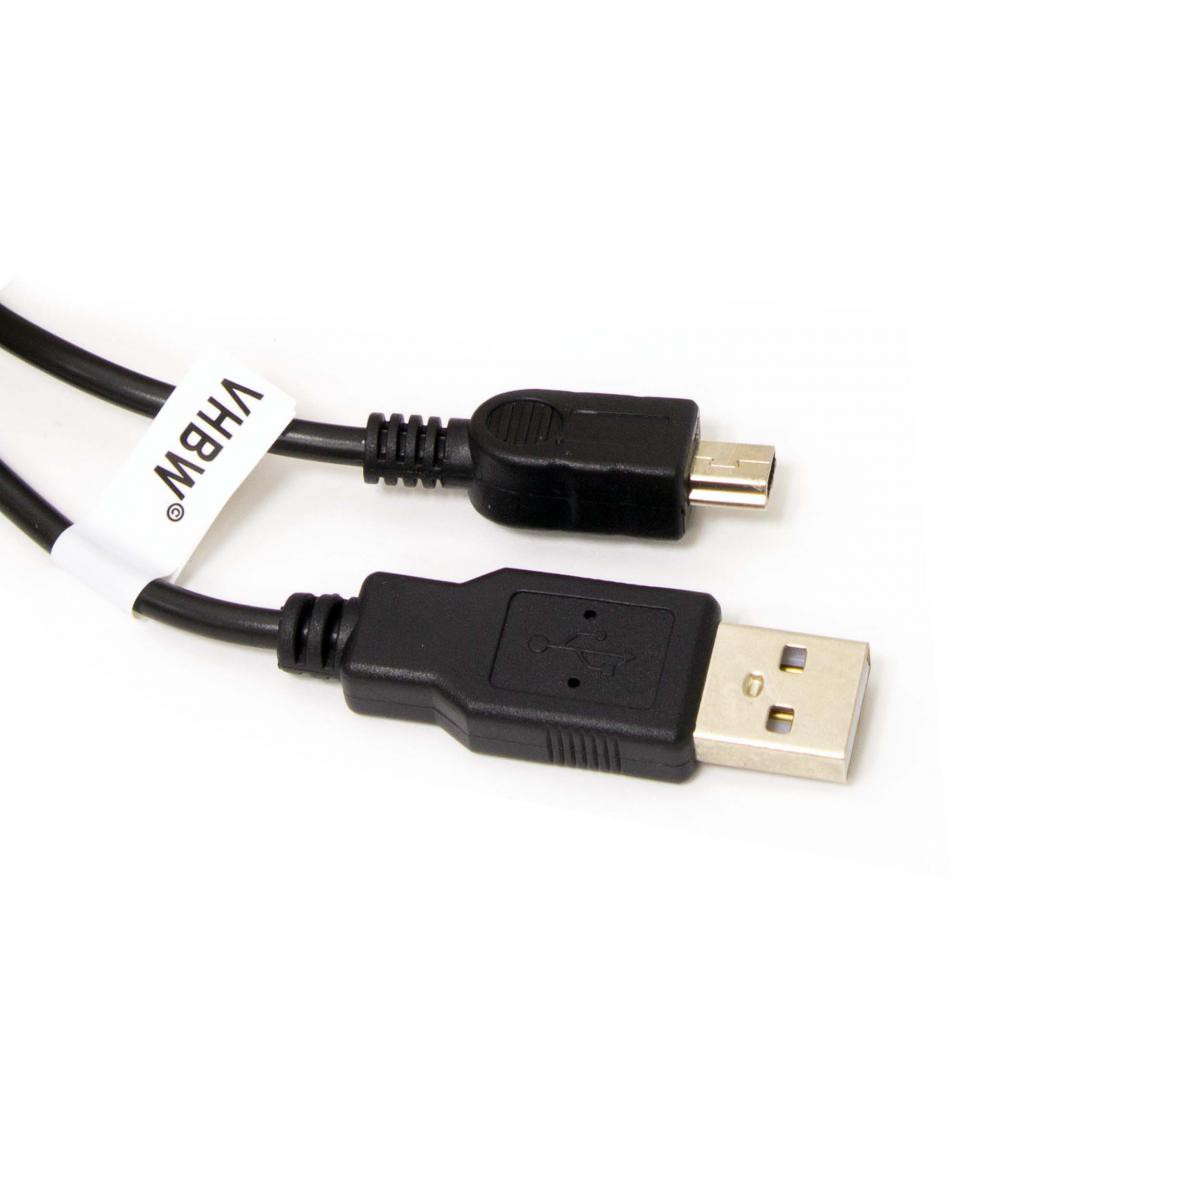 Vhbw - Câble USB A-Mini-B 5 pôles noir/black, longueur 1m, pour SONY CYBERSHOT - Câble antenne